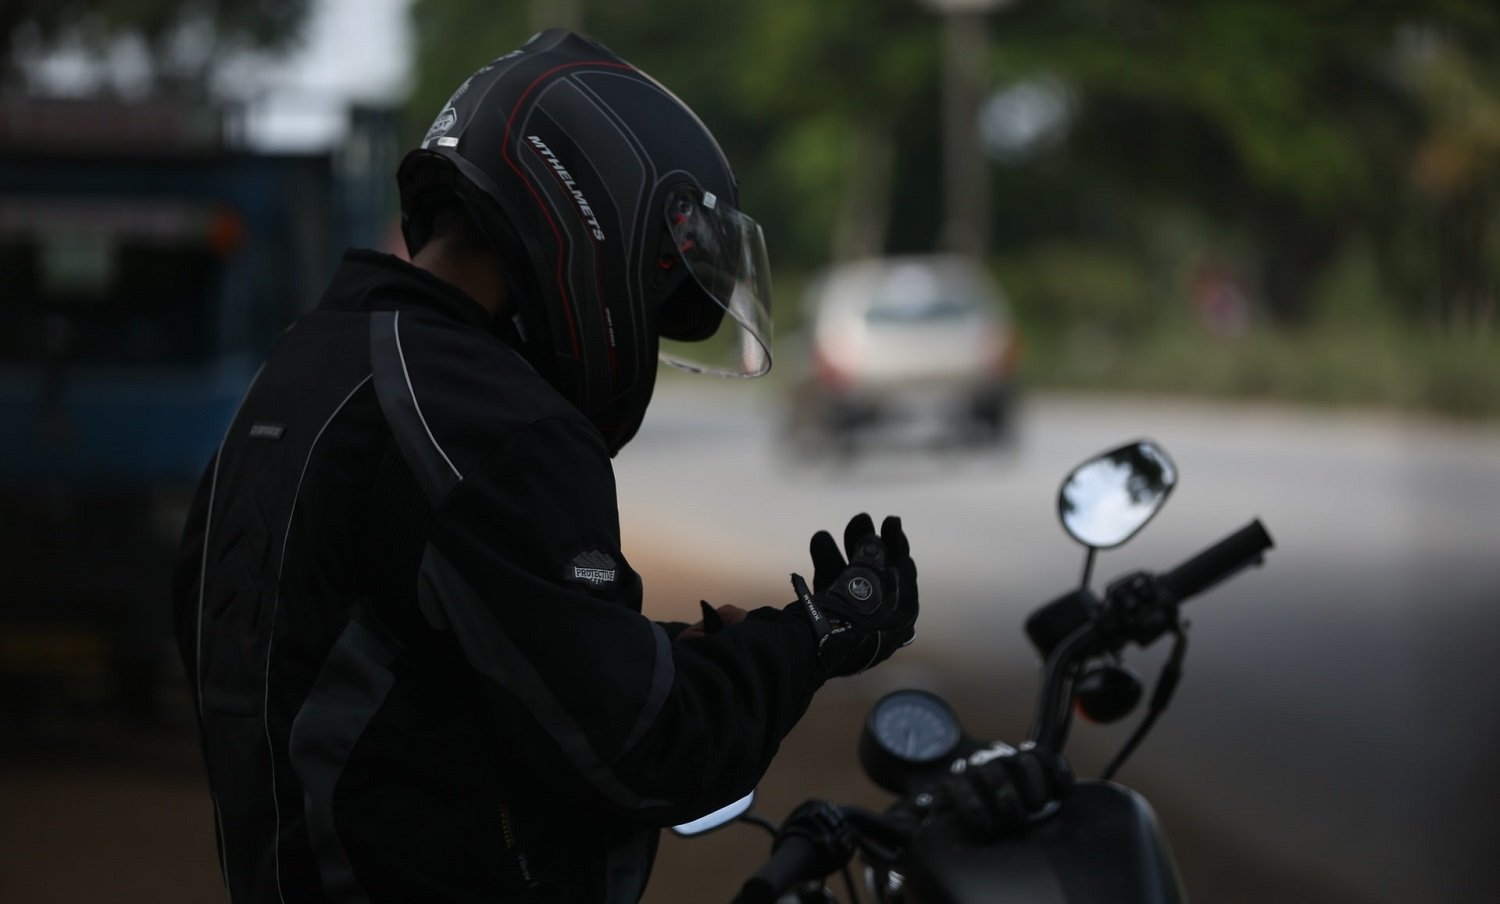 Beginner Motorcycle Gears and Equipment